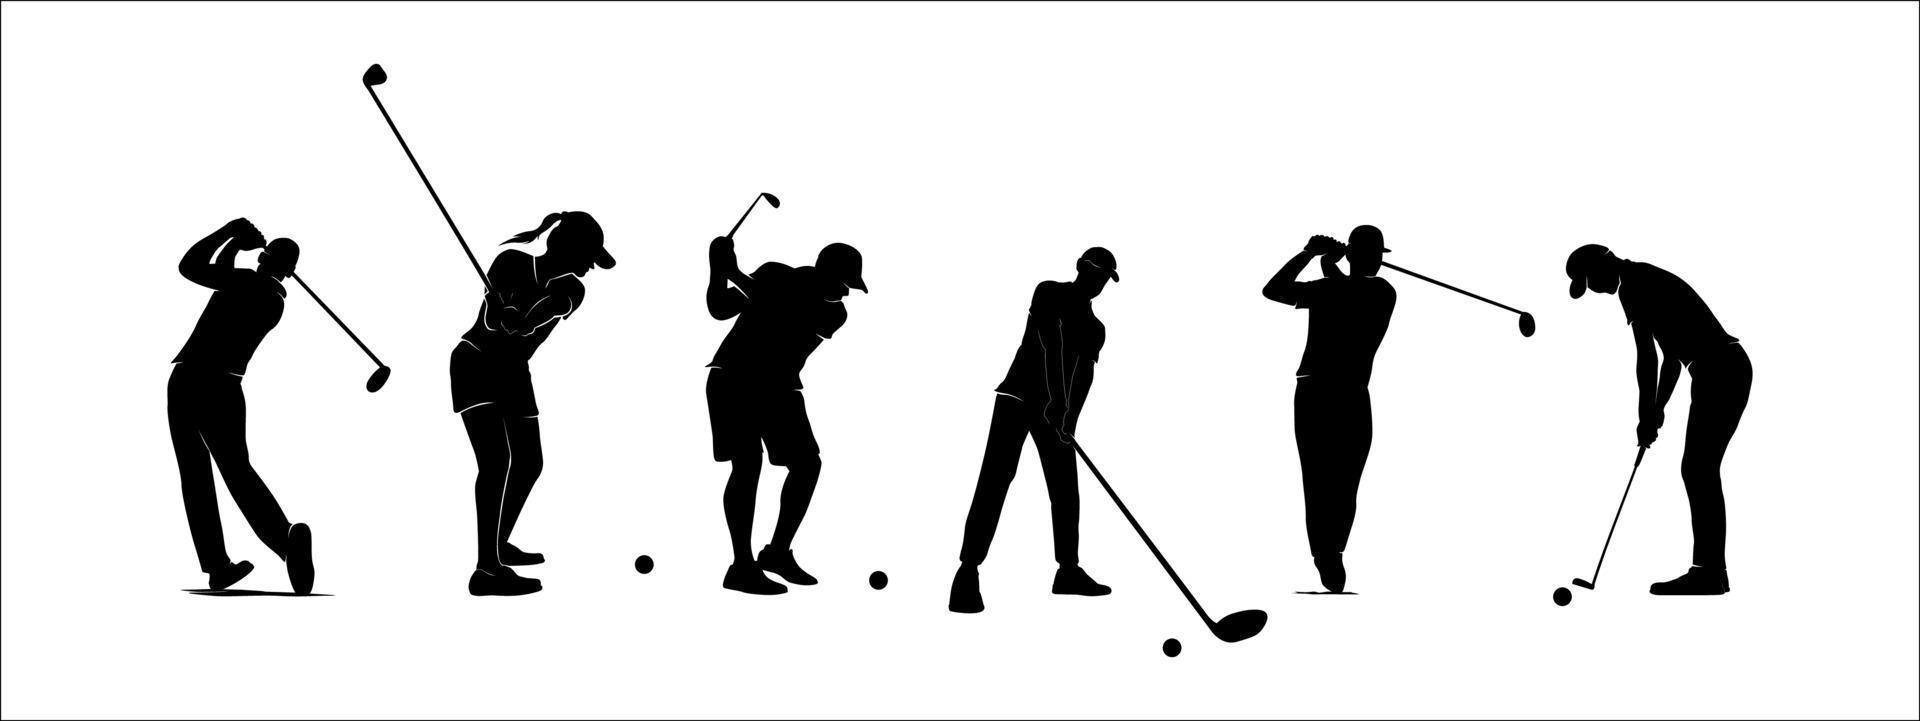 Golfspieler-Silhouette-Sammlung vektor